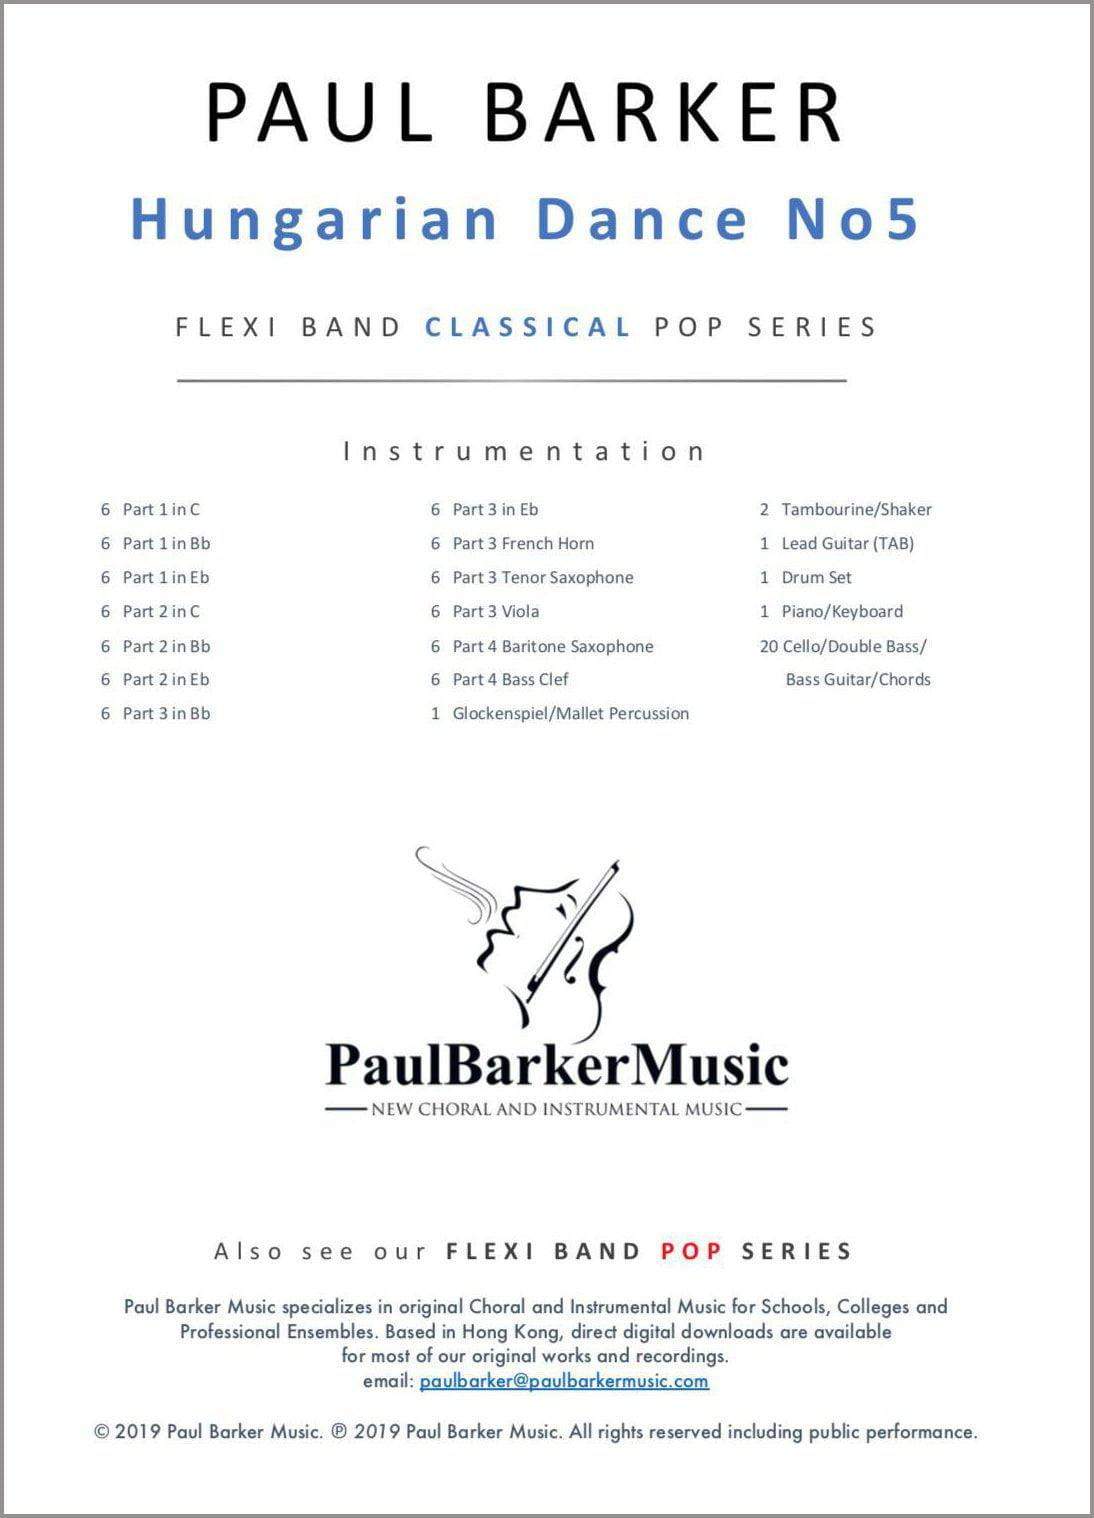 Hungarian Dance No 5 - Paul Barker Music 